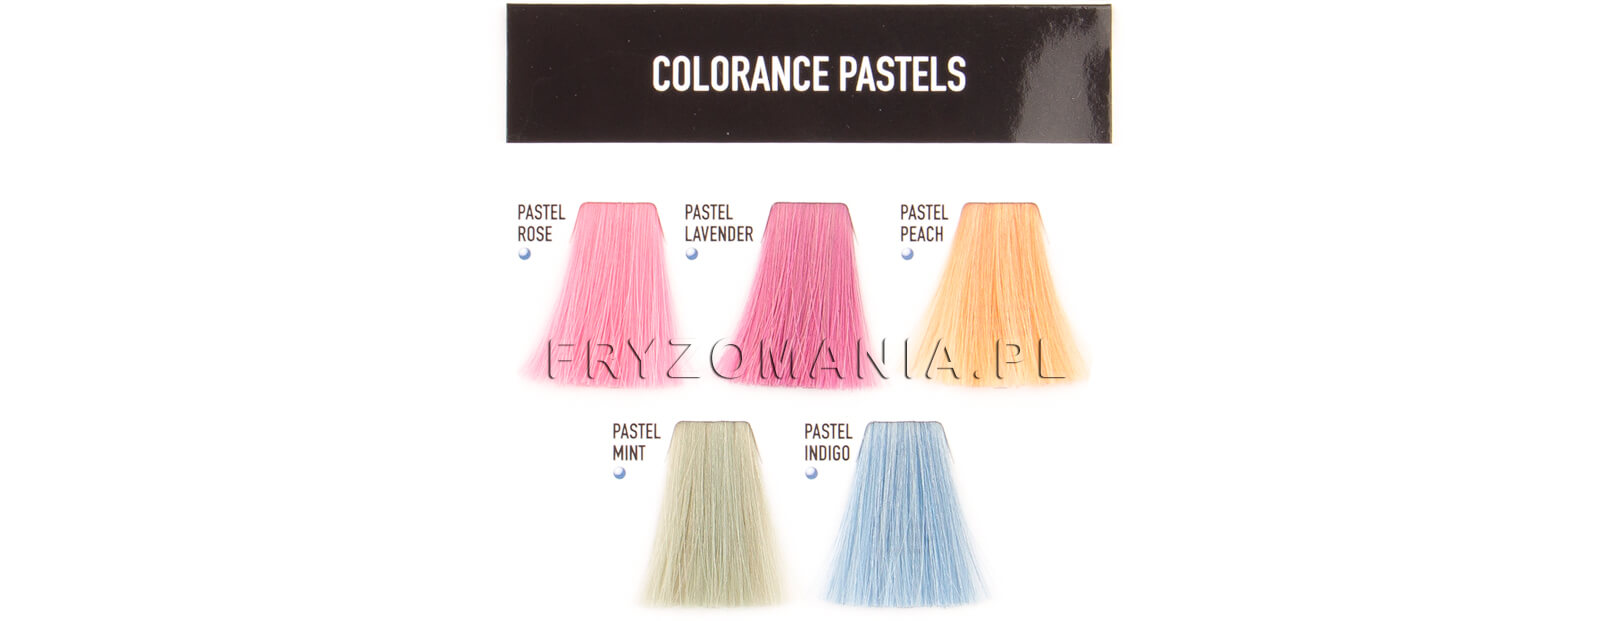 goldwell-pastels